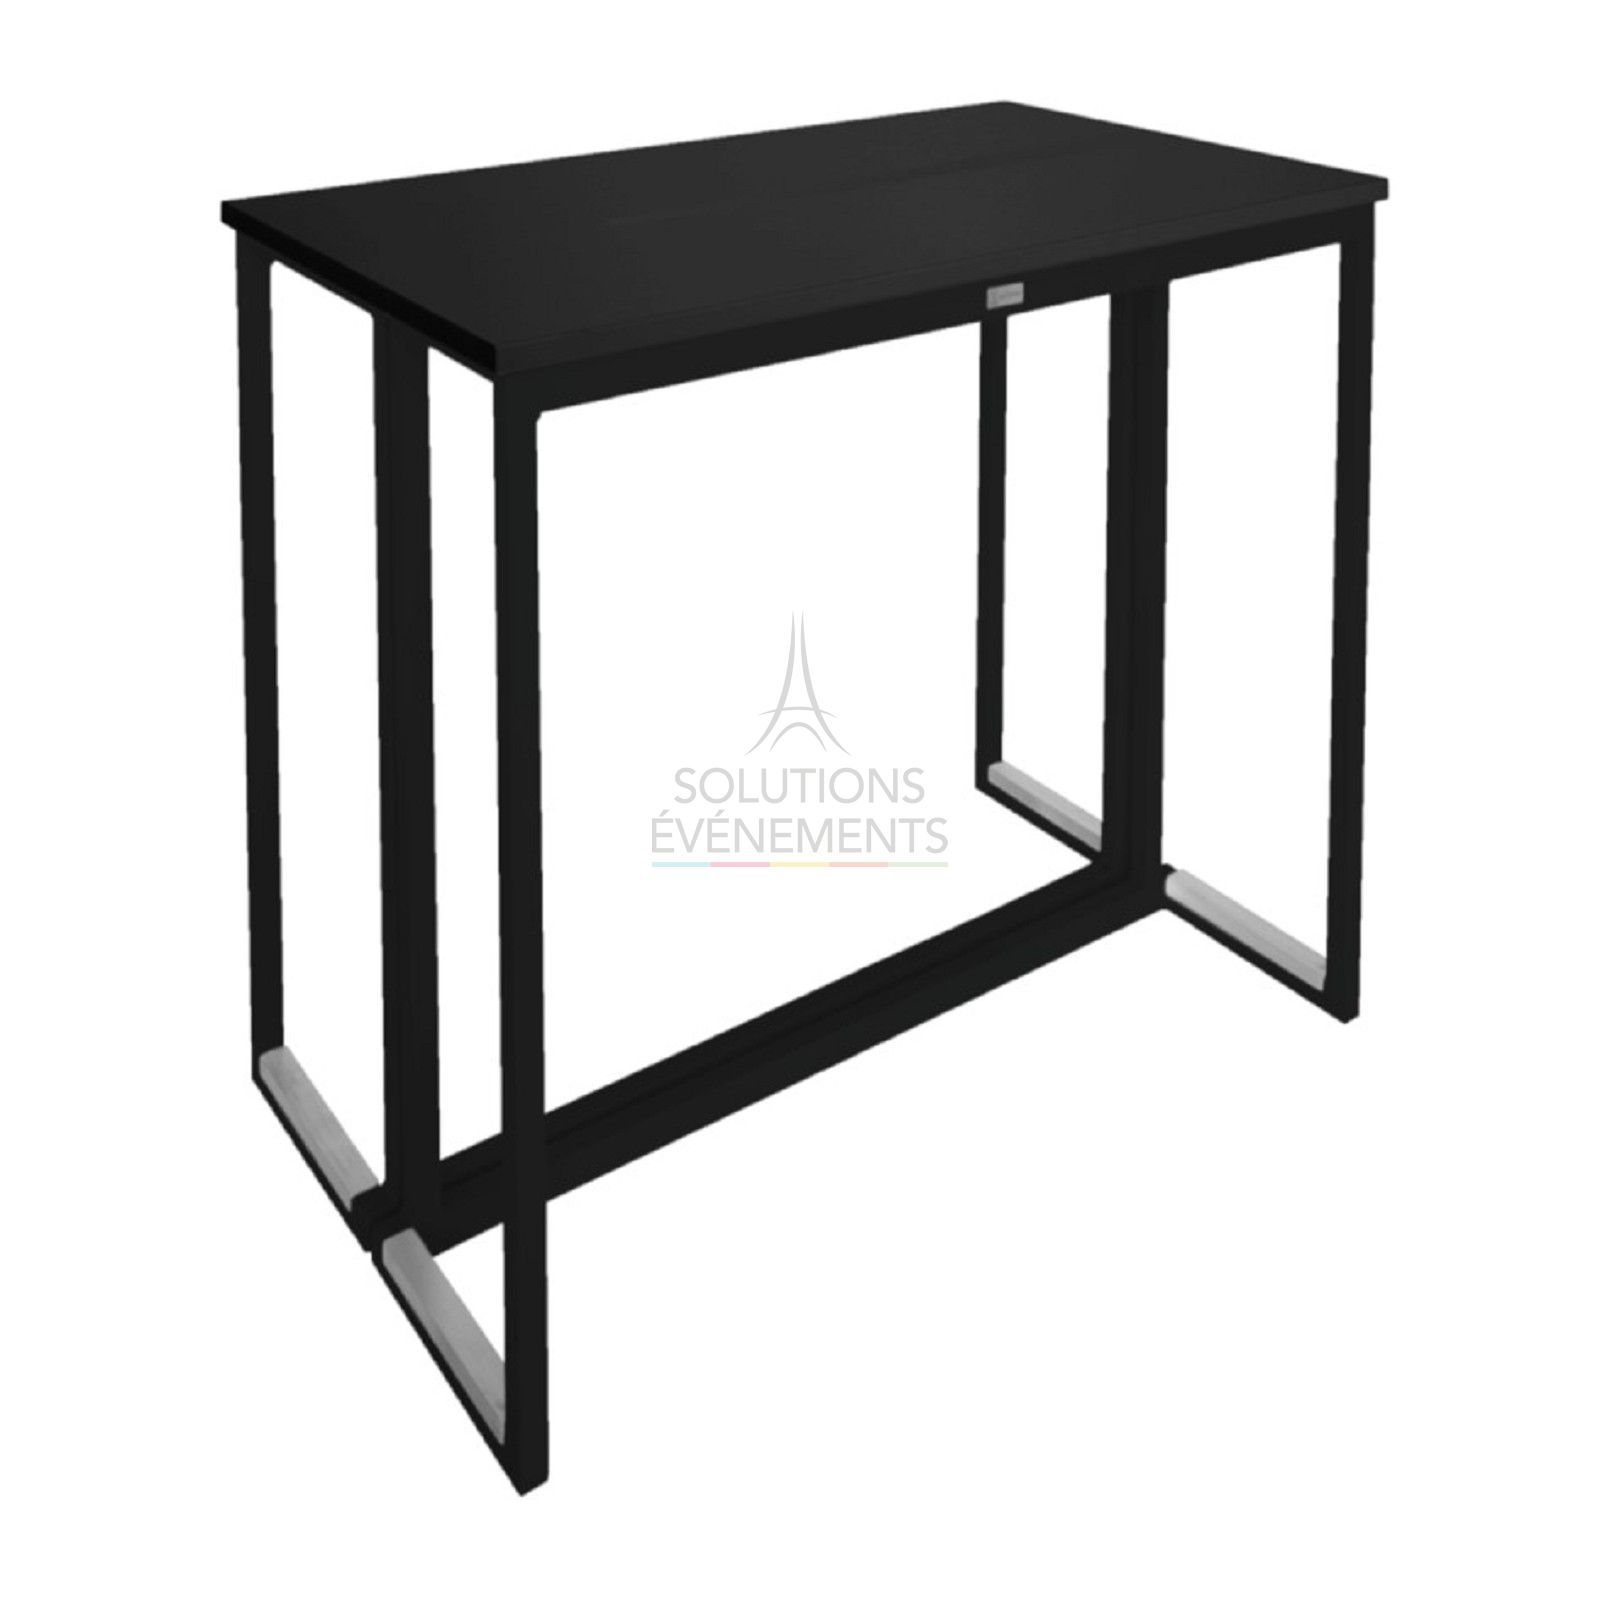 Black Kubo high table - black top with modern design